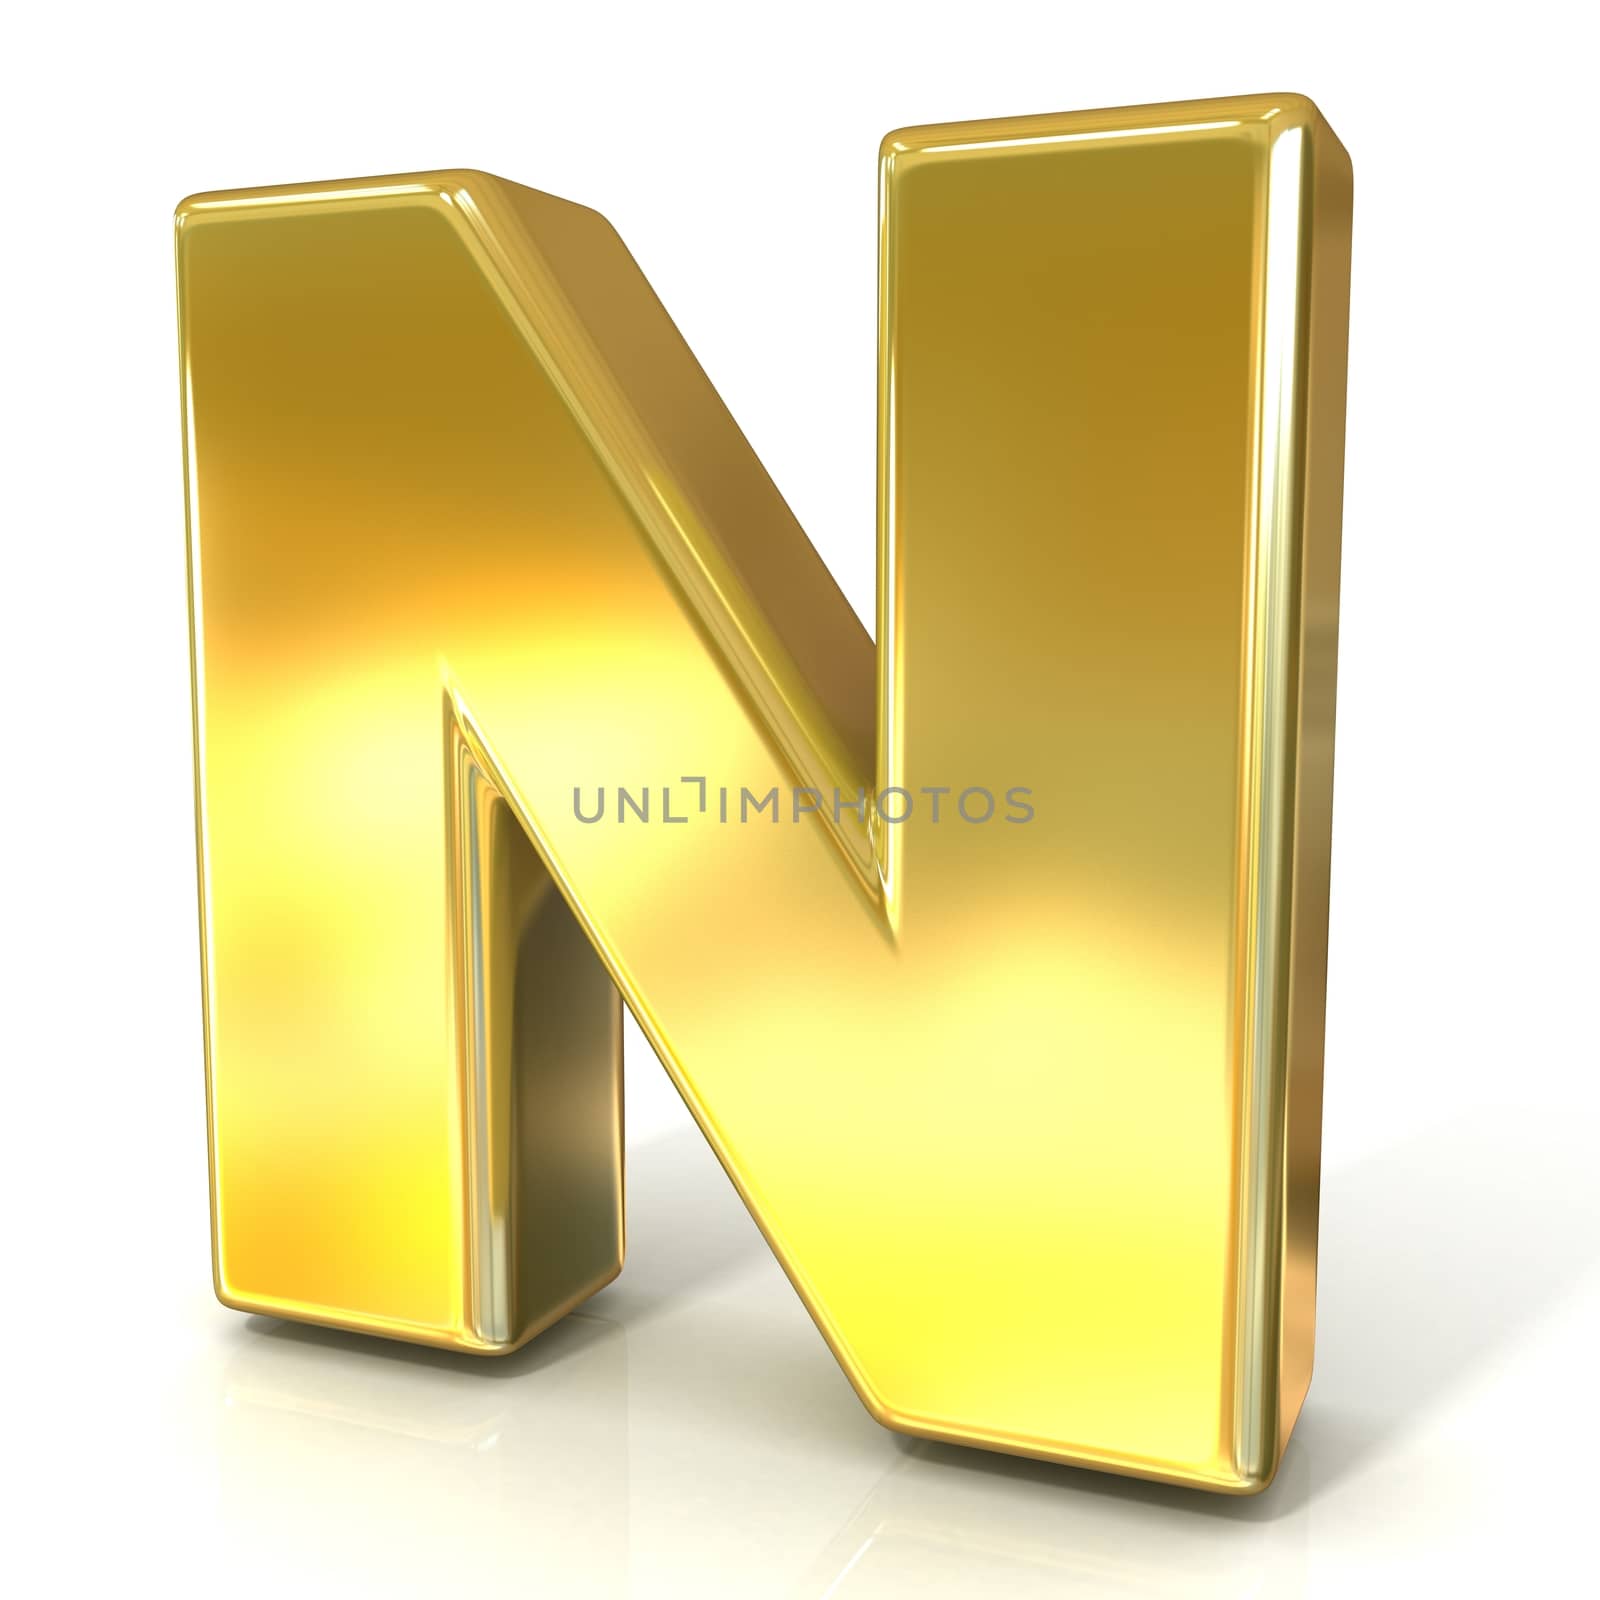 Golden font collection letter - N. 3D render illustration, isolated on white background.